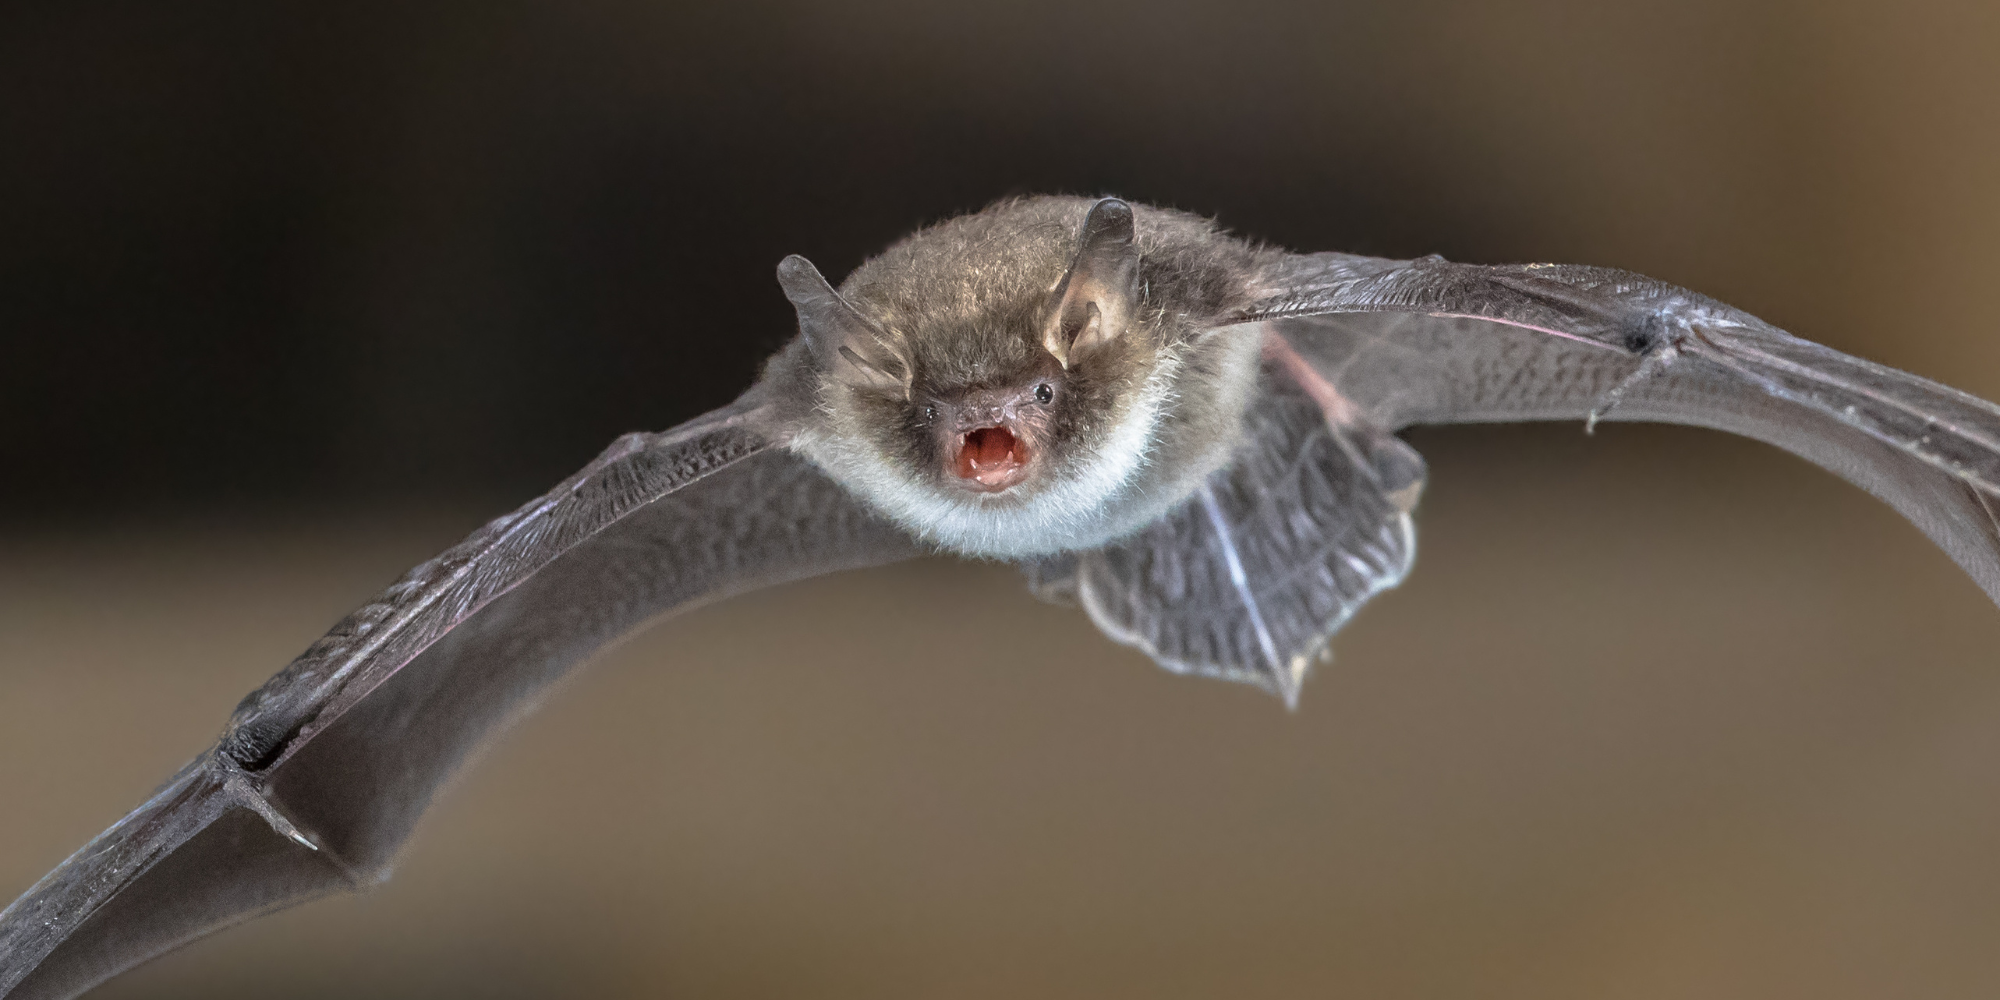 A natterer's bat in flight.